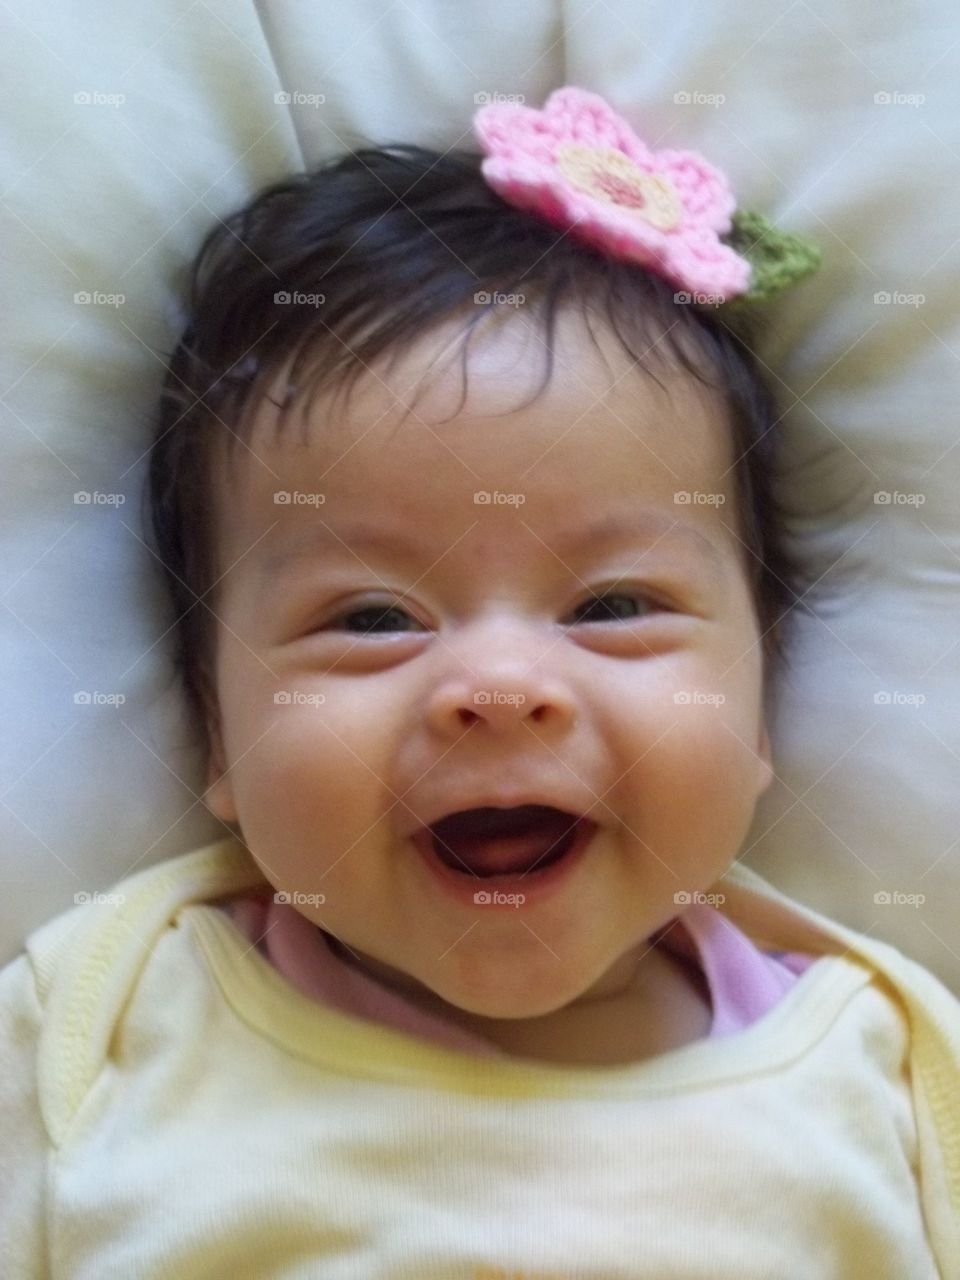 Cute baby girl laughing